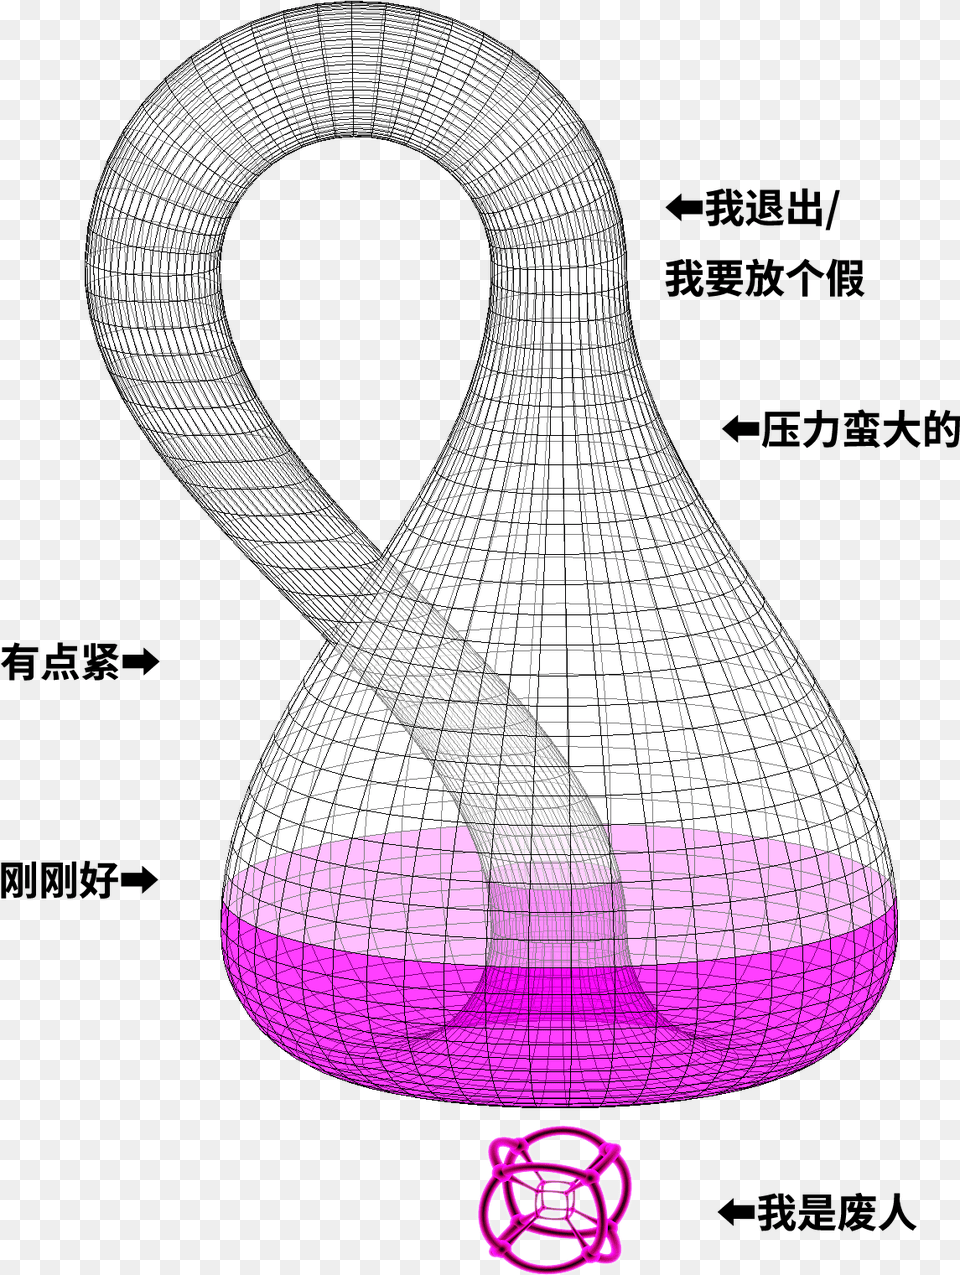 0 V0 Zh Portable Network Graphics, Jar, Jug, Pottery, Vase Png Image